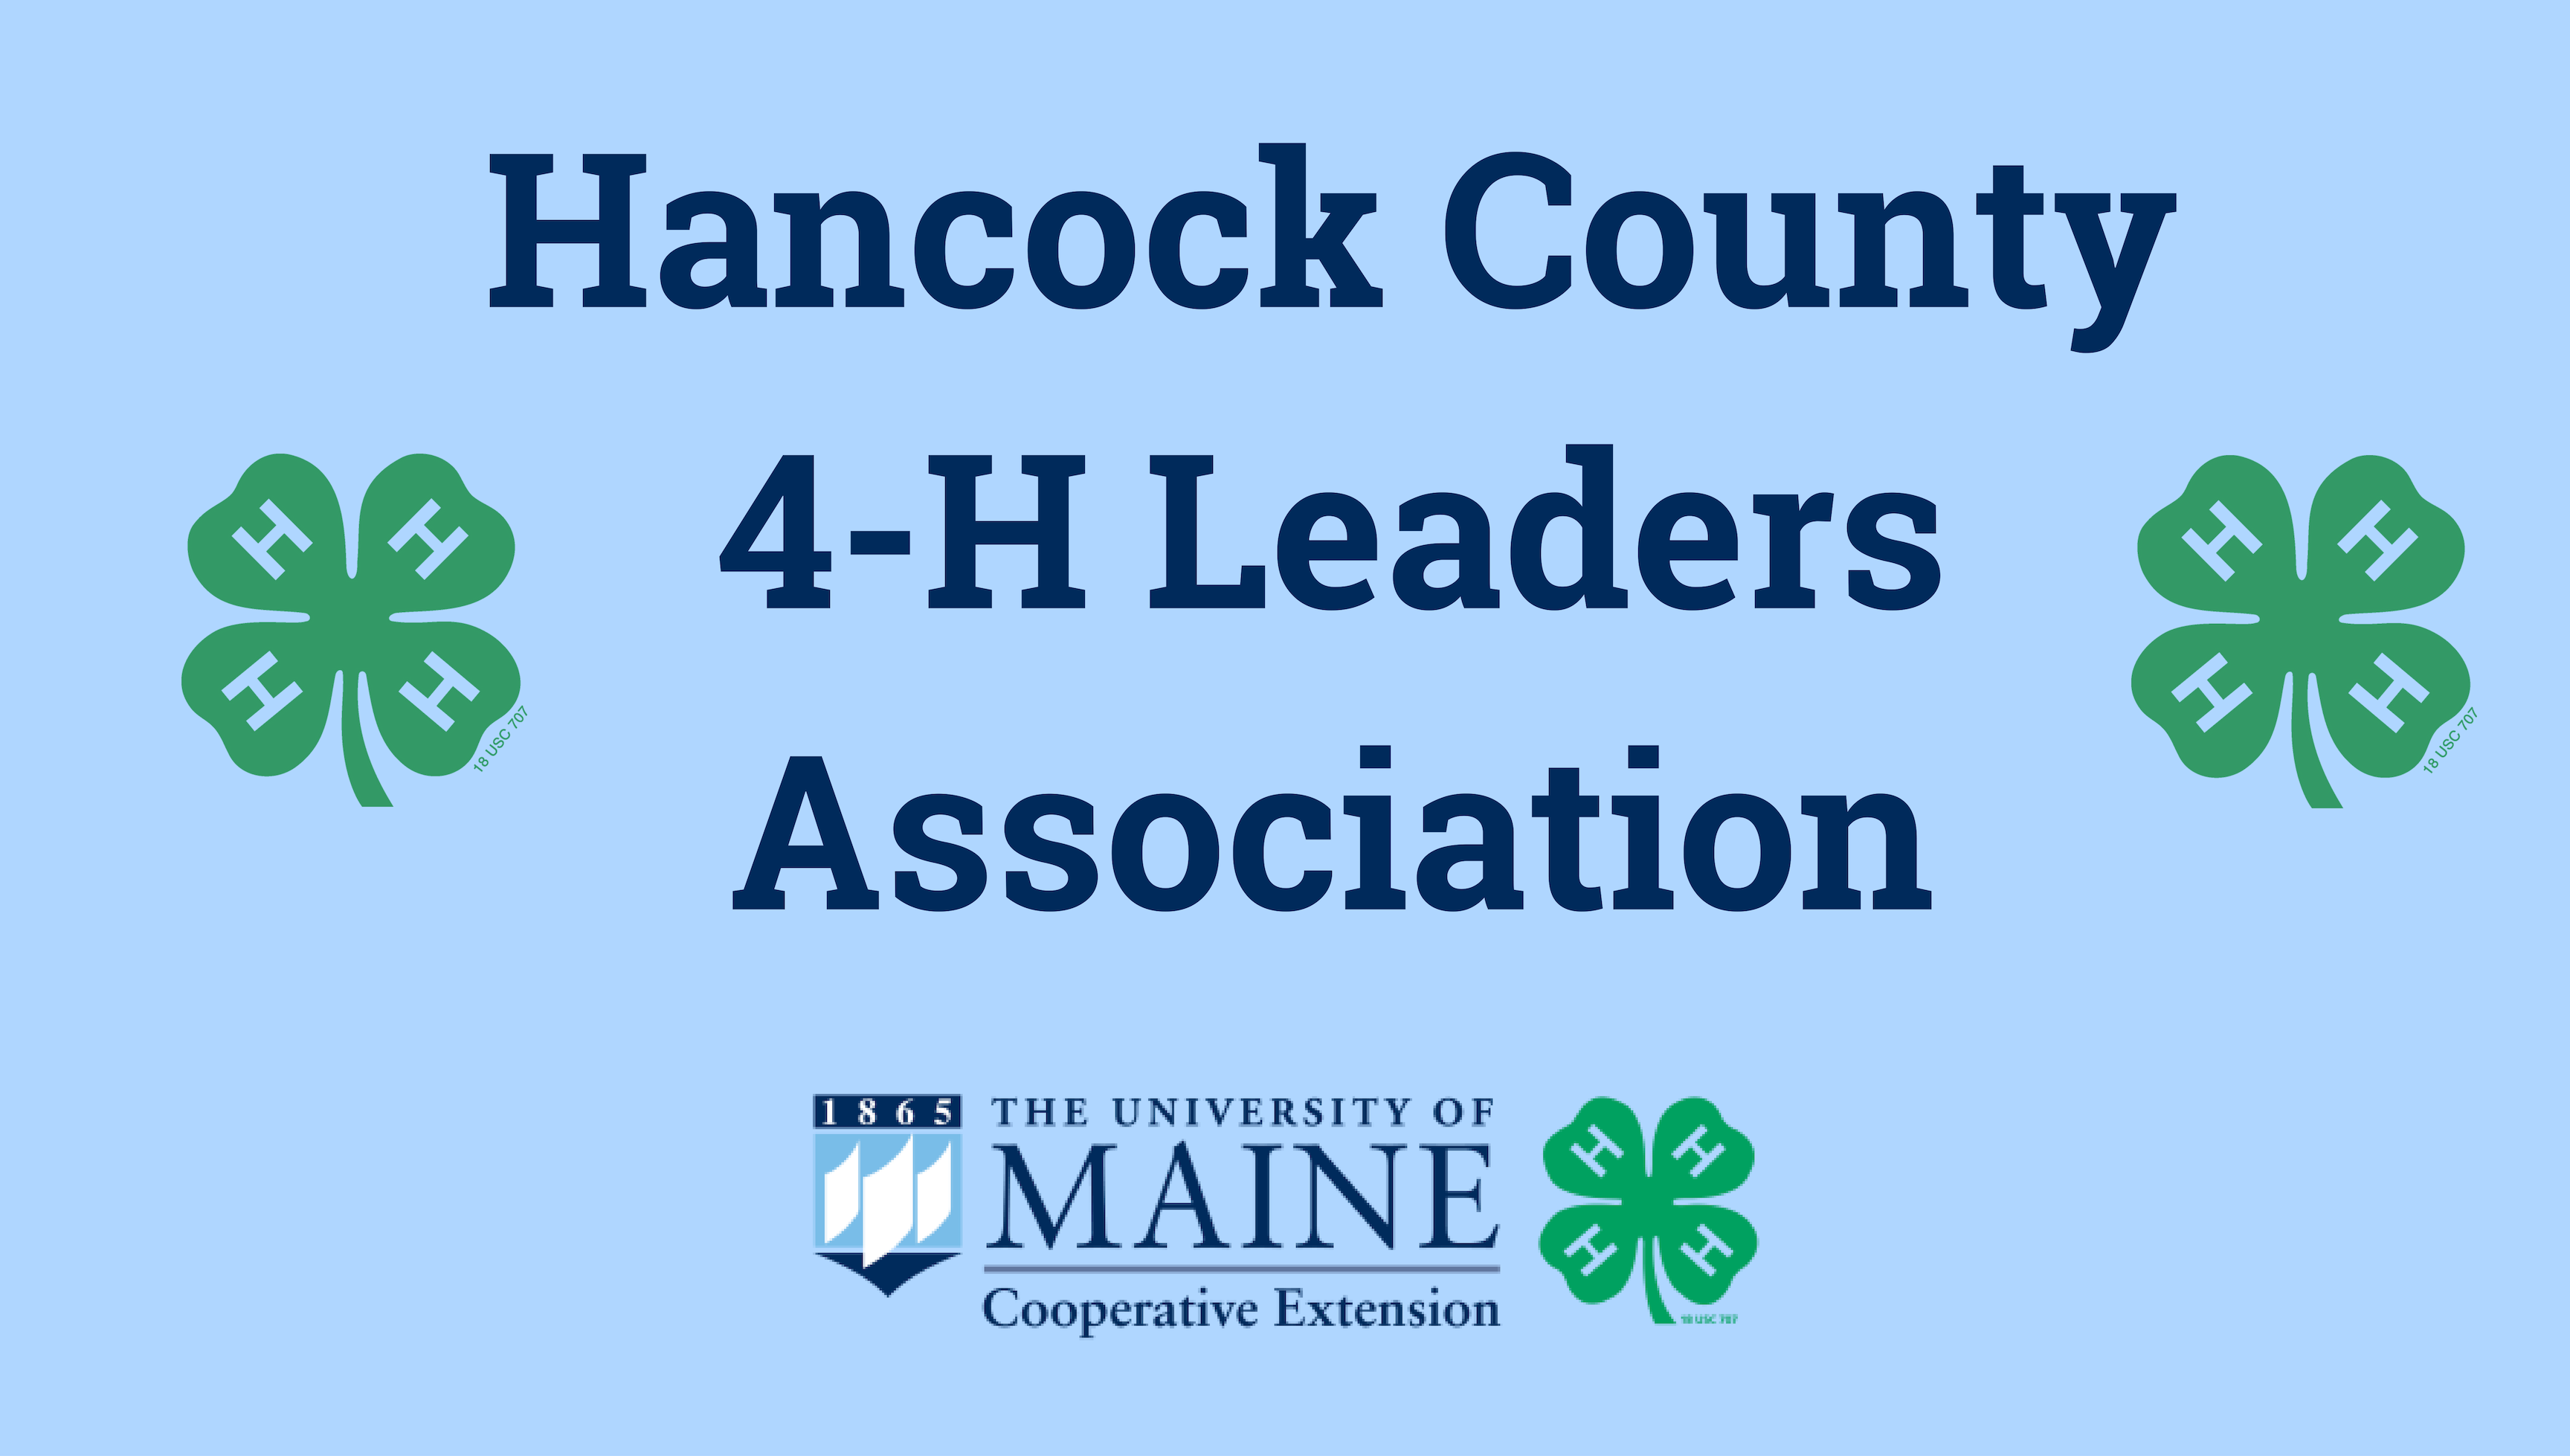 4-H leaders association logo